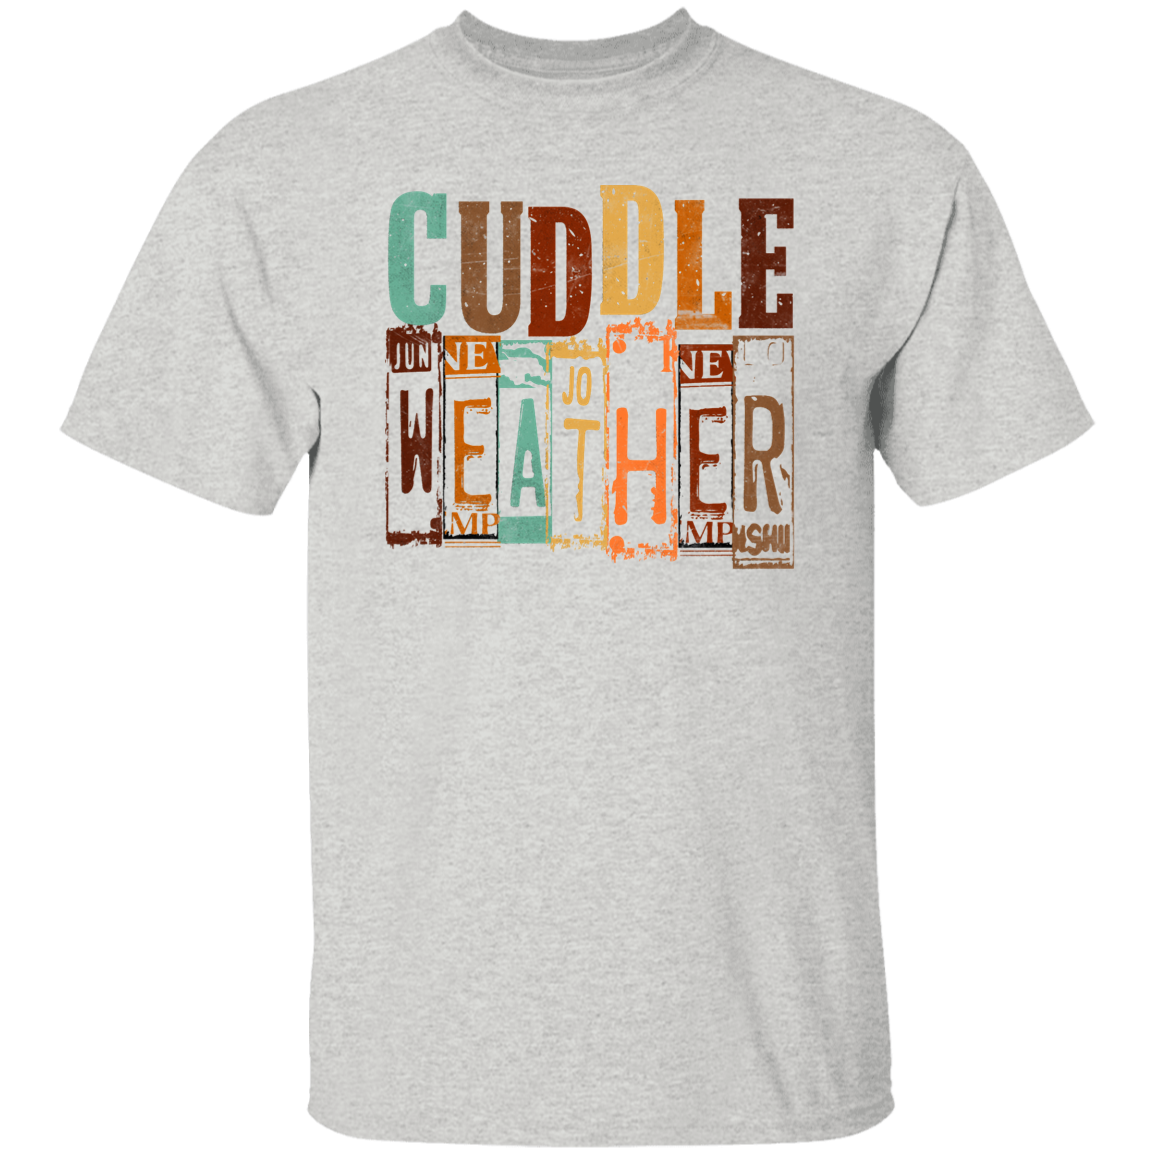 Cuddle Weather Shirt